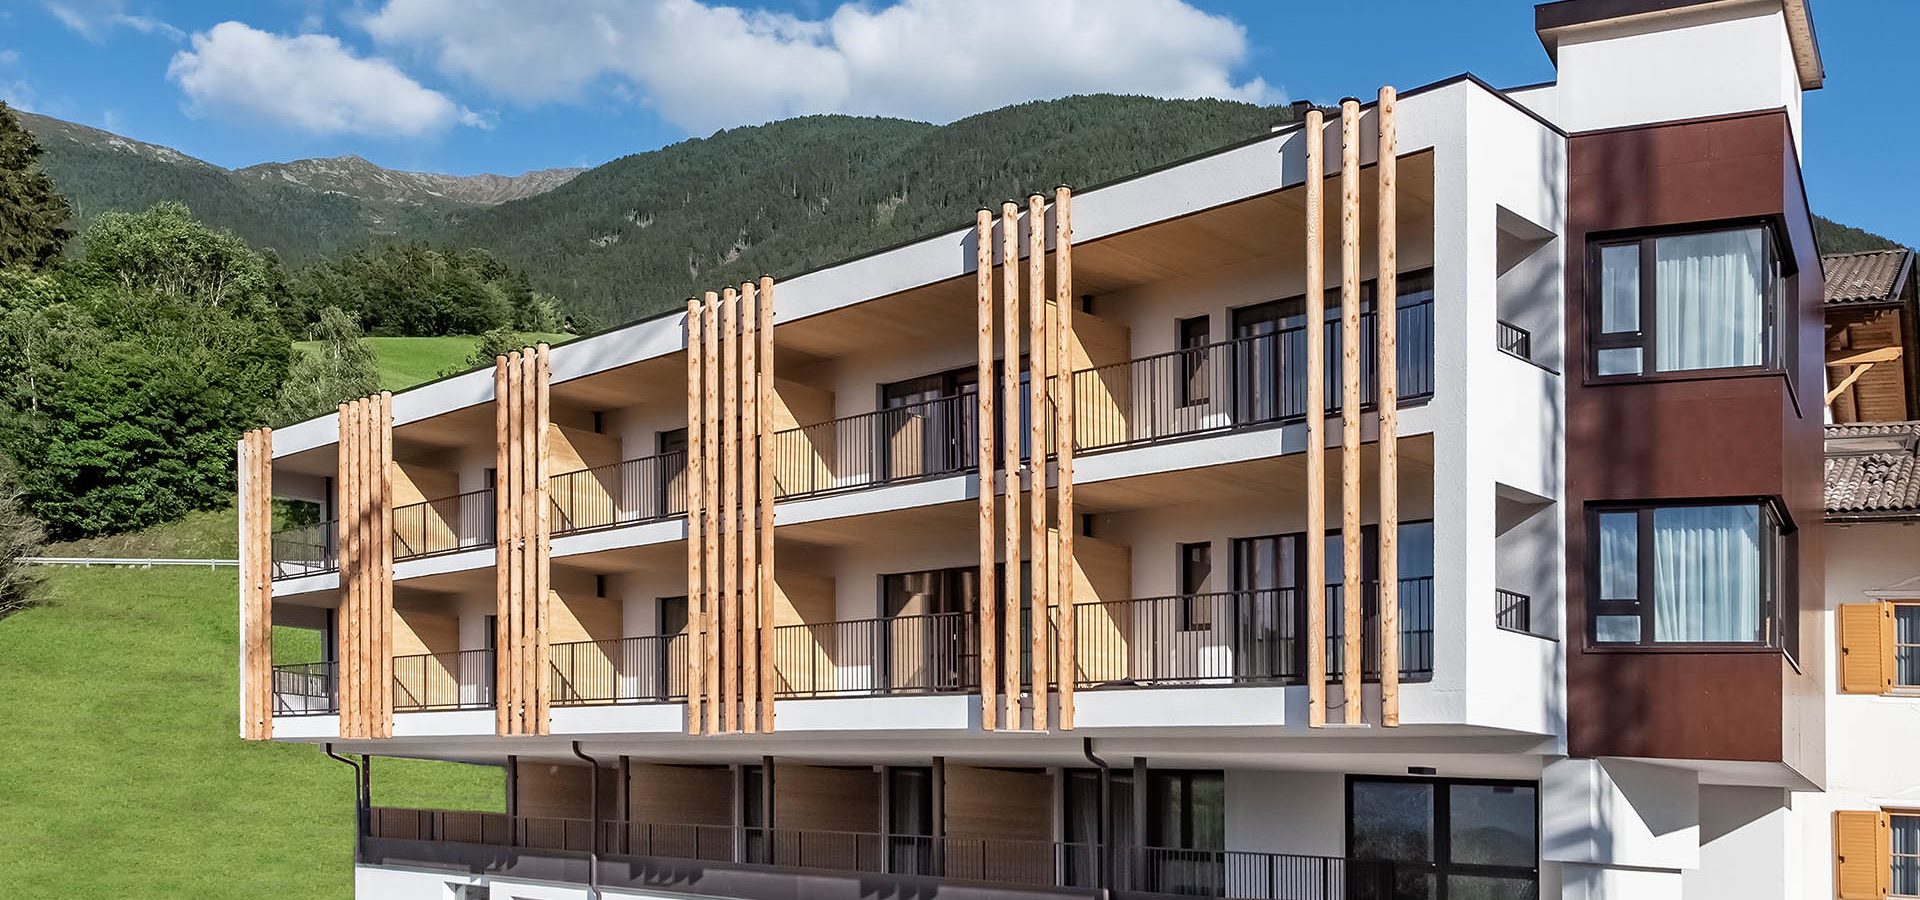 Torgglerhof in Südtirol - Das Panoramahotel über Brixen – Plose